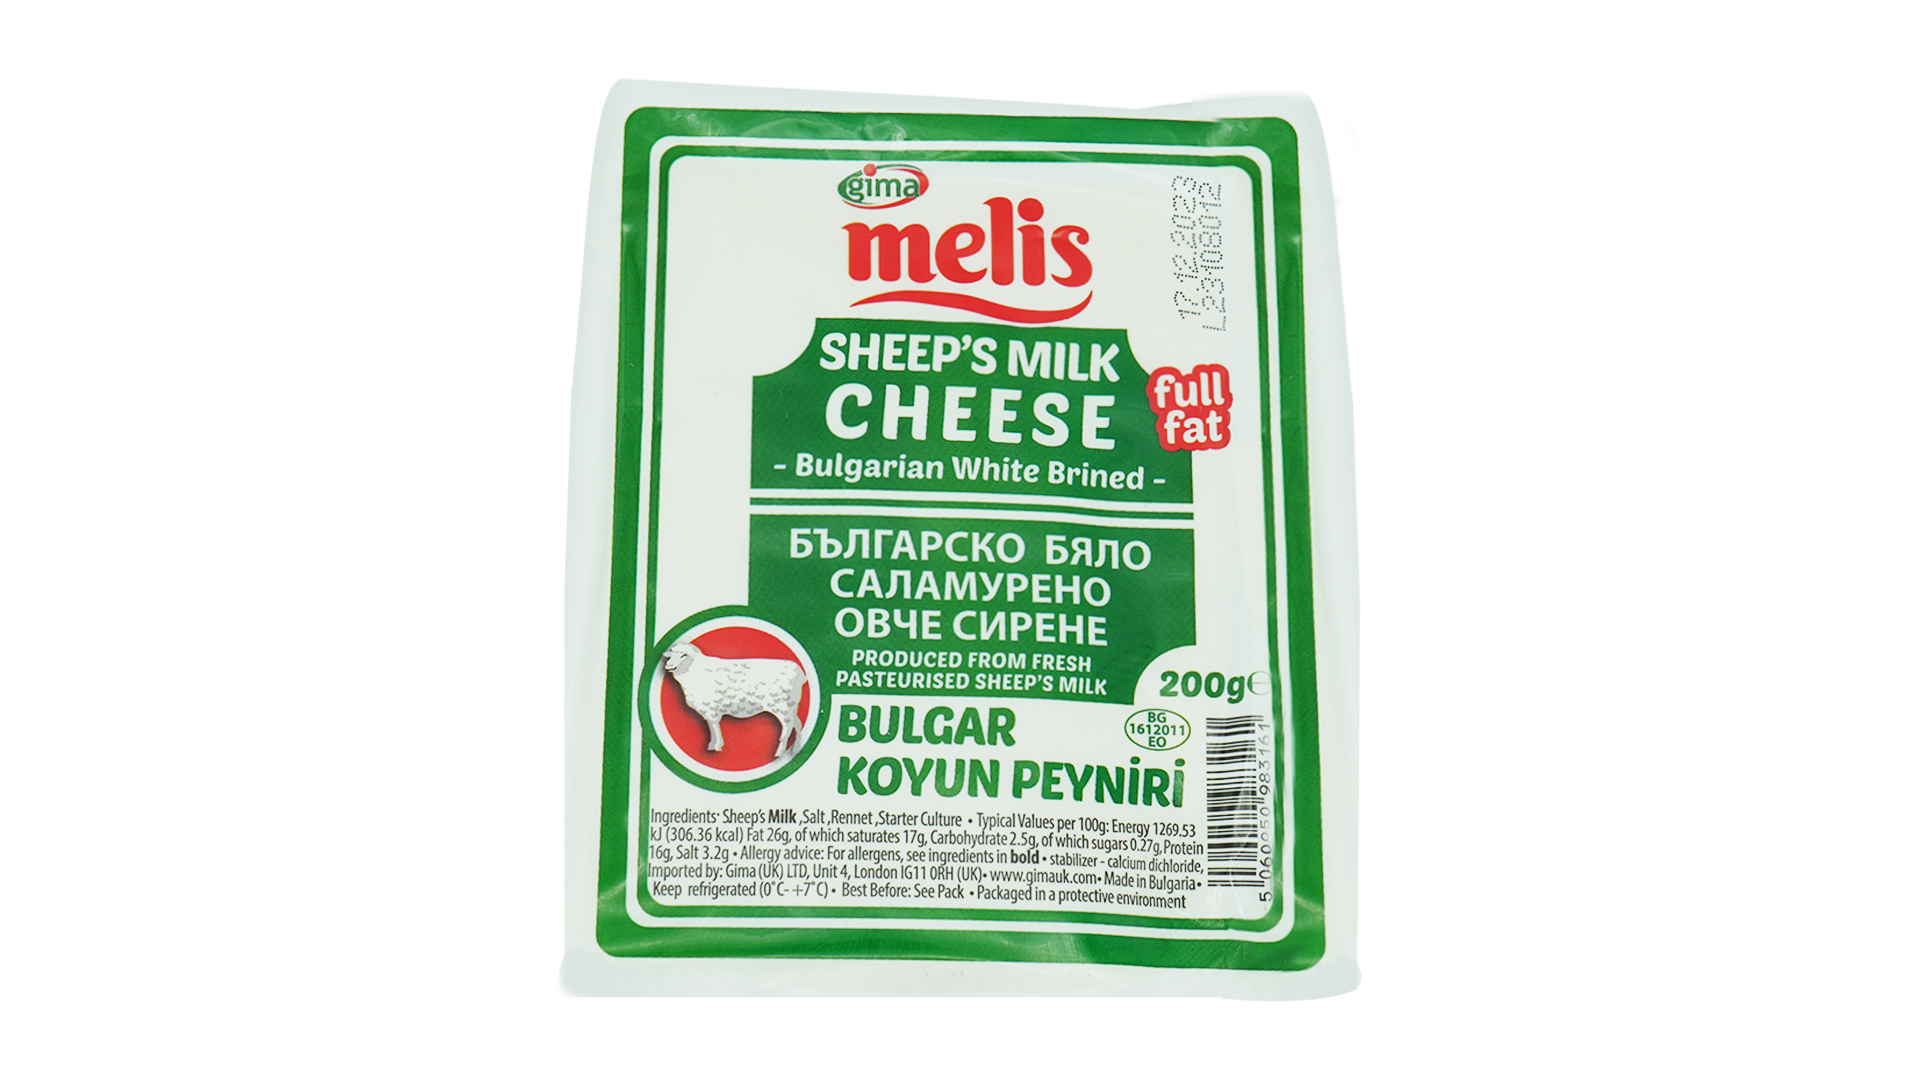 Gima melis sheeps milk cheese bulgarian white brined 200g 1